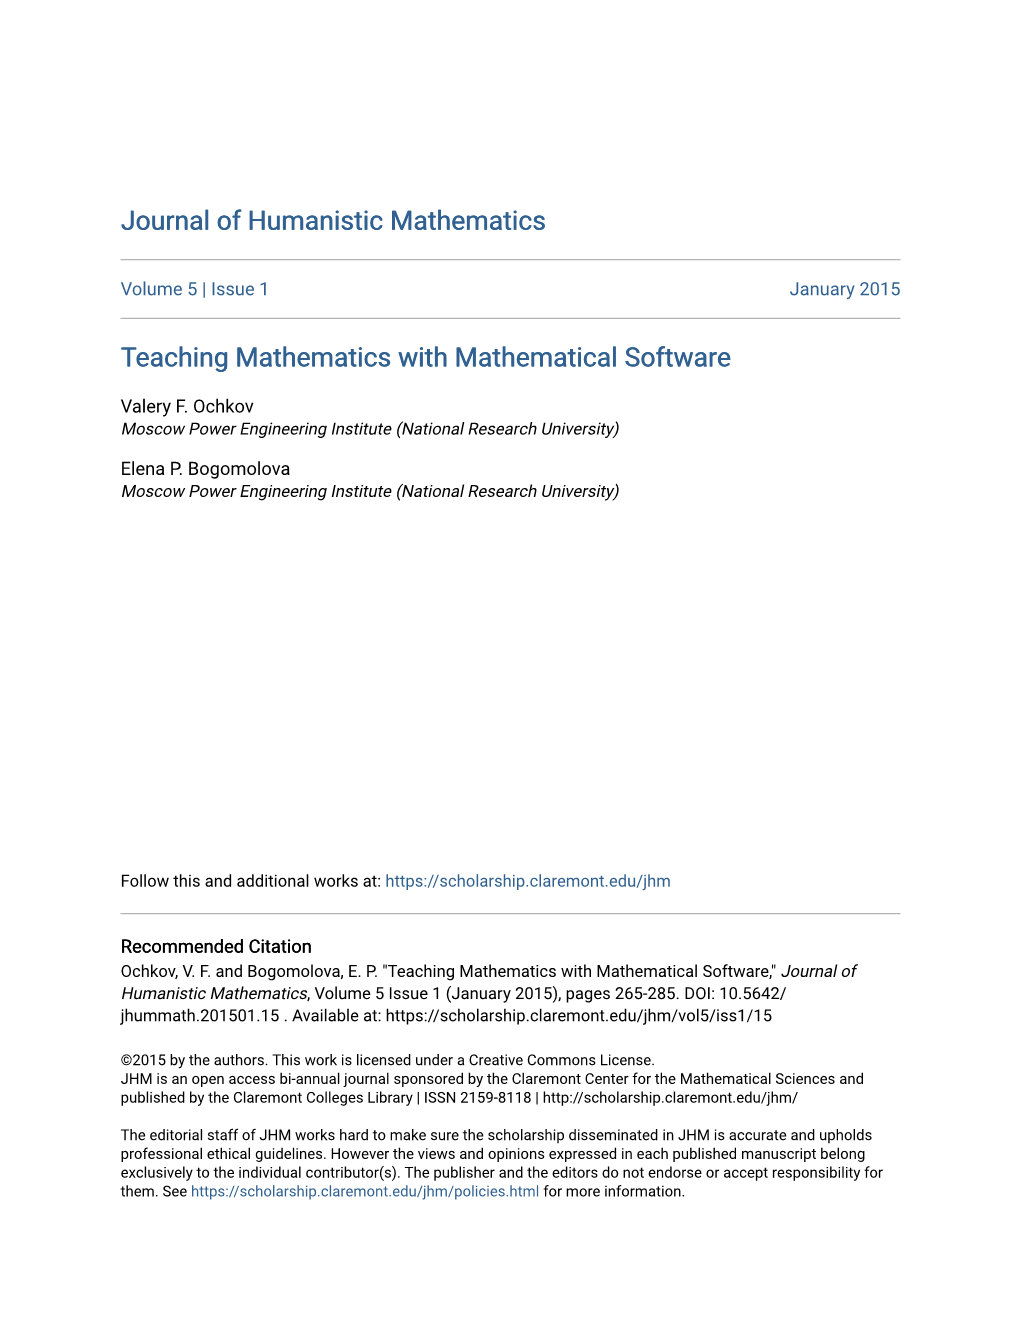 Teaching Mathematics with Mathematical Software